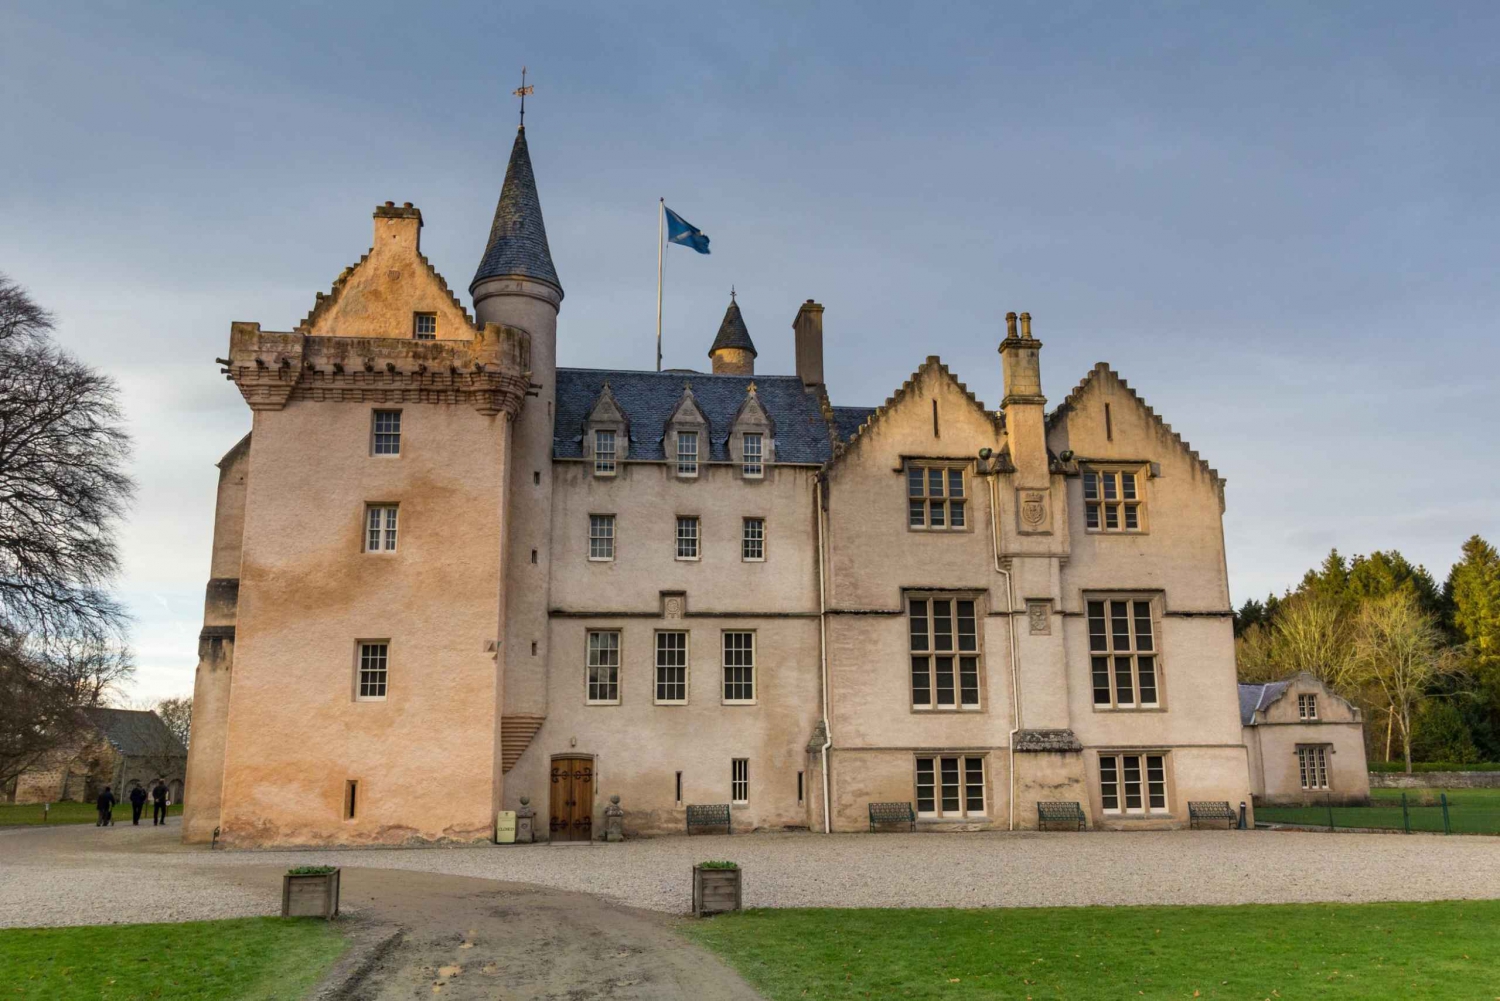 4-dagers slottsrundtur i det skotske høylandet fra Edinburgh